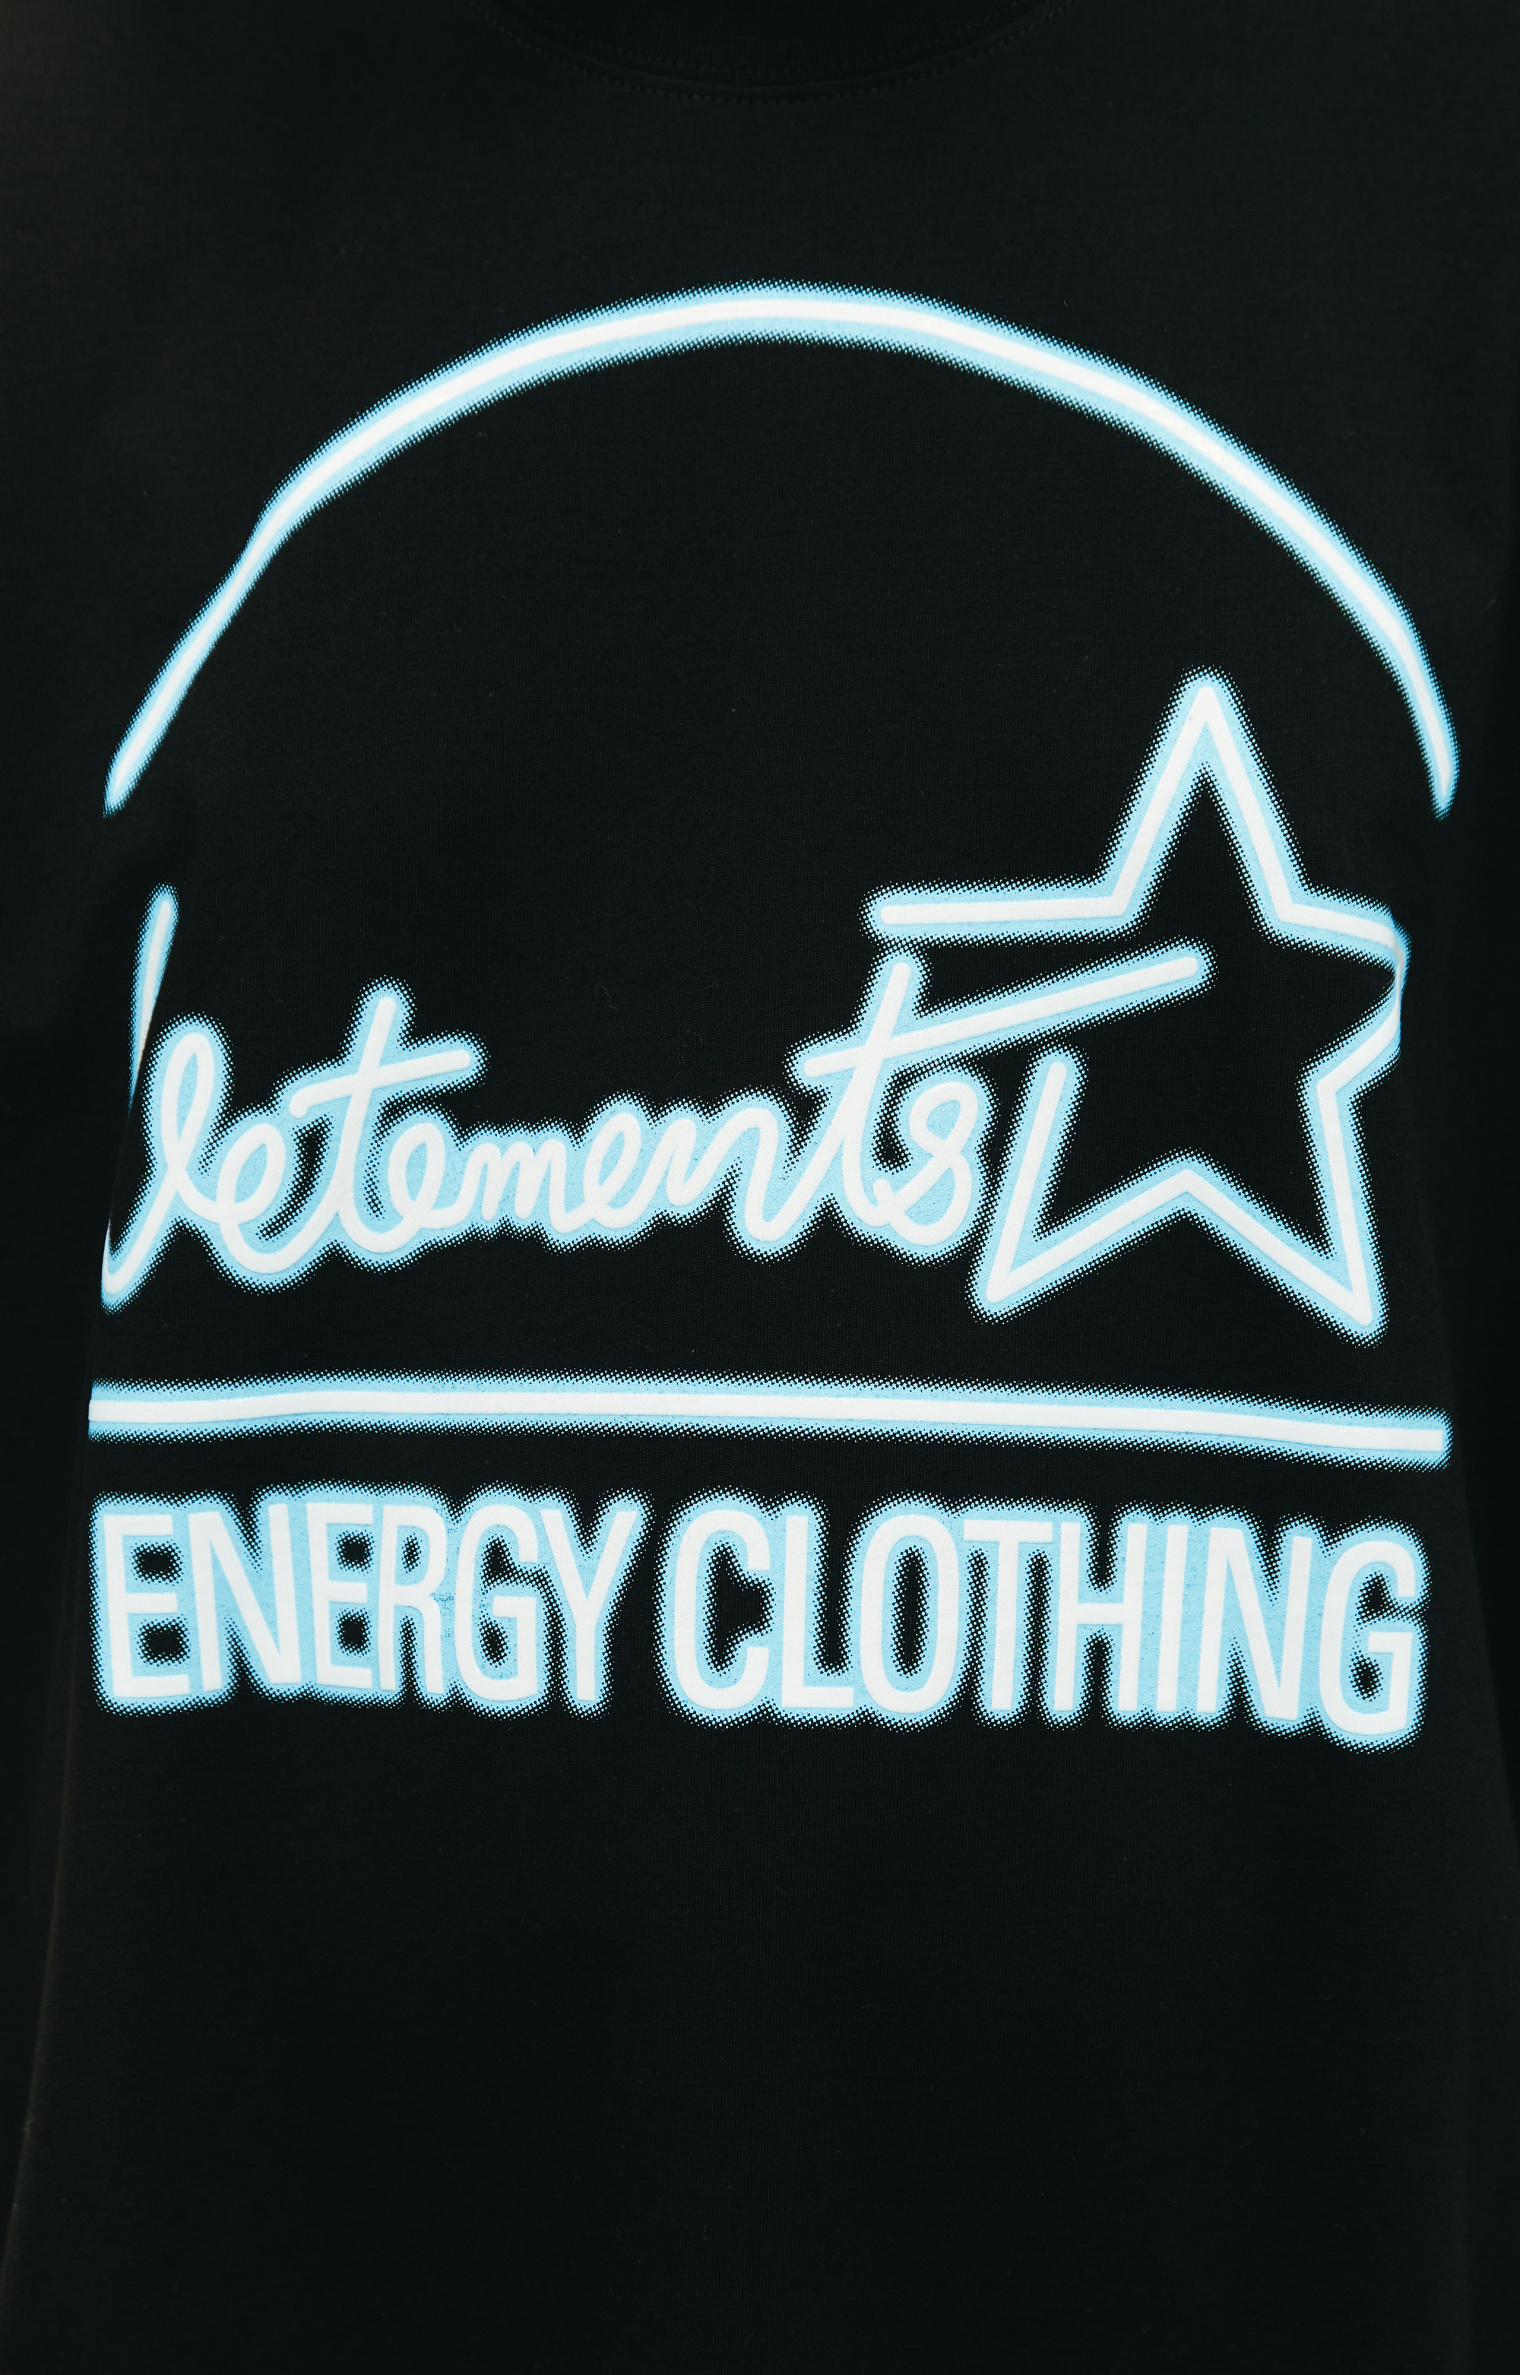 VETEMENTS Energy Clothing printed t-shirt